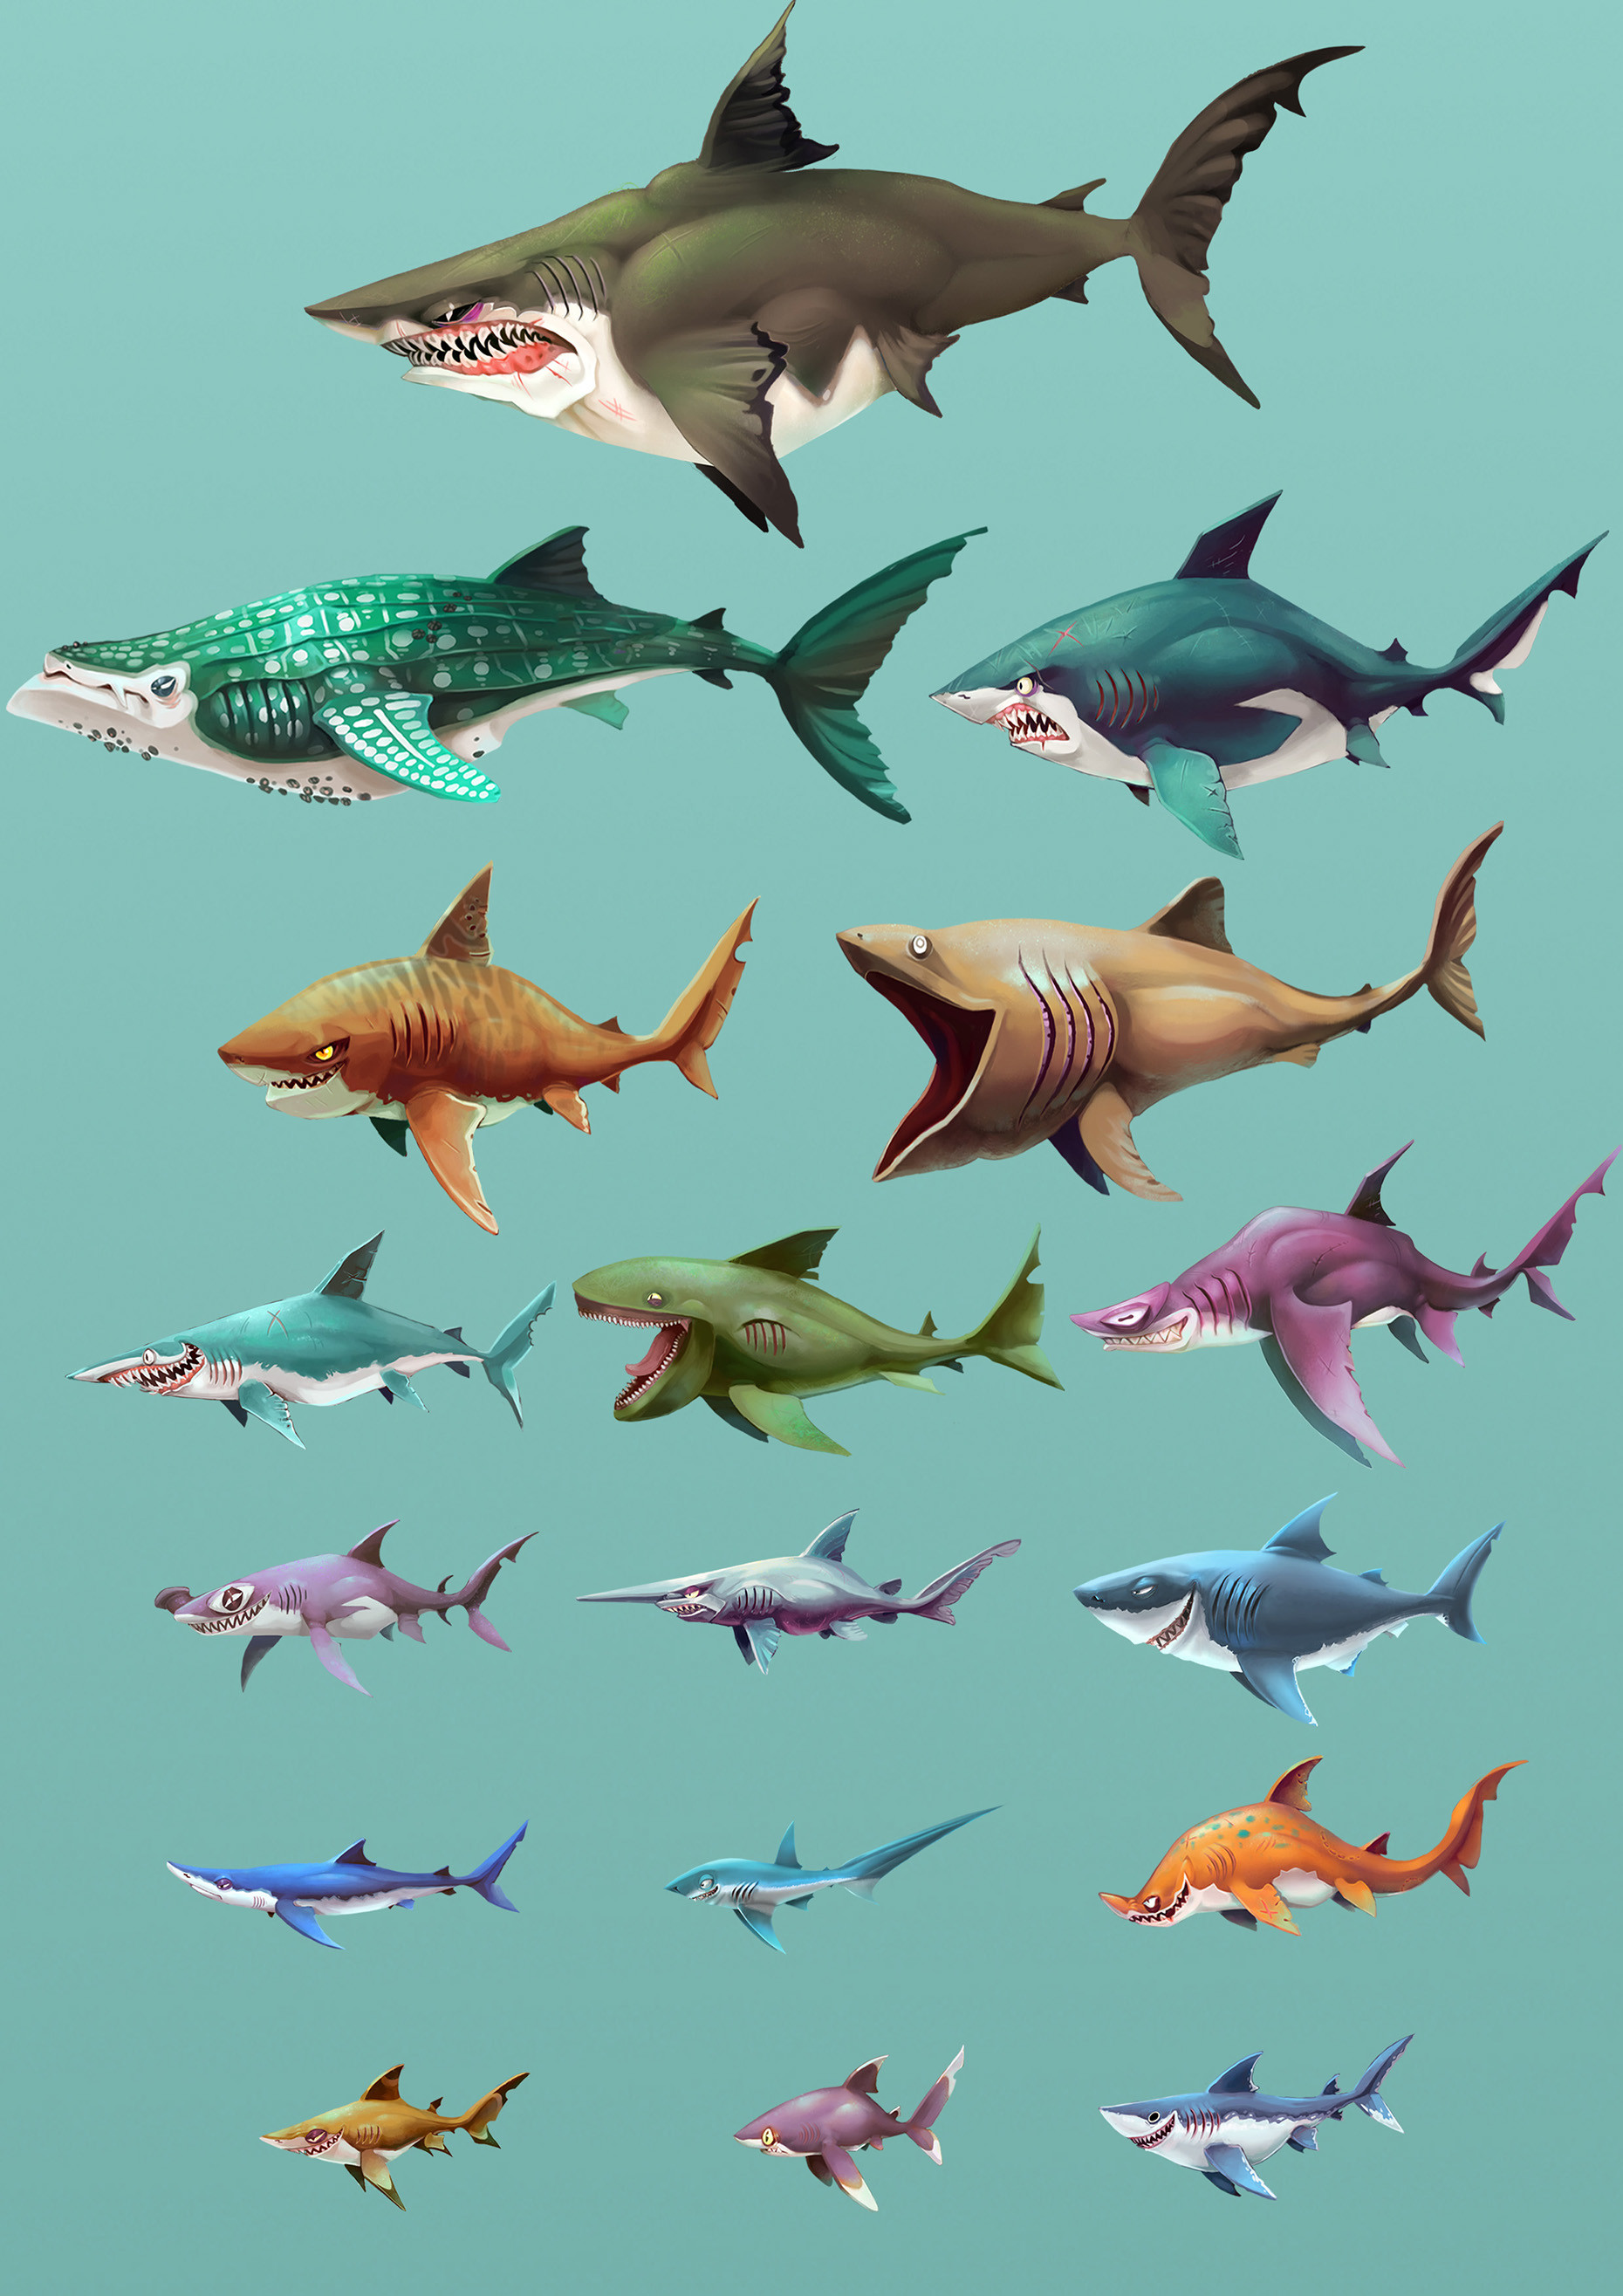 Shark Size Comparison Chart